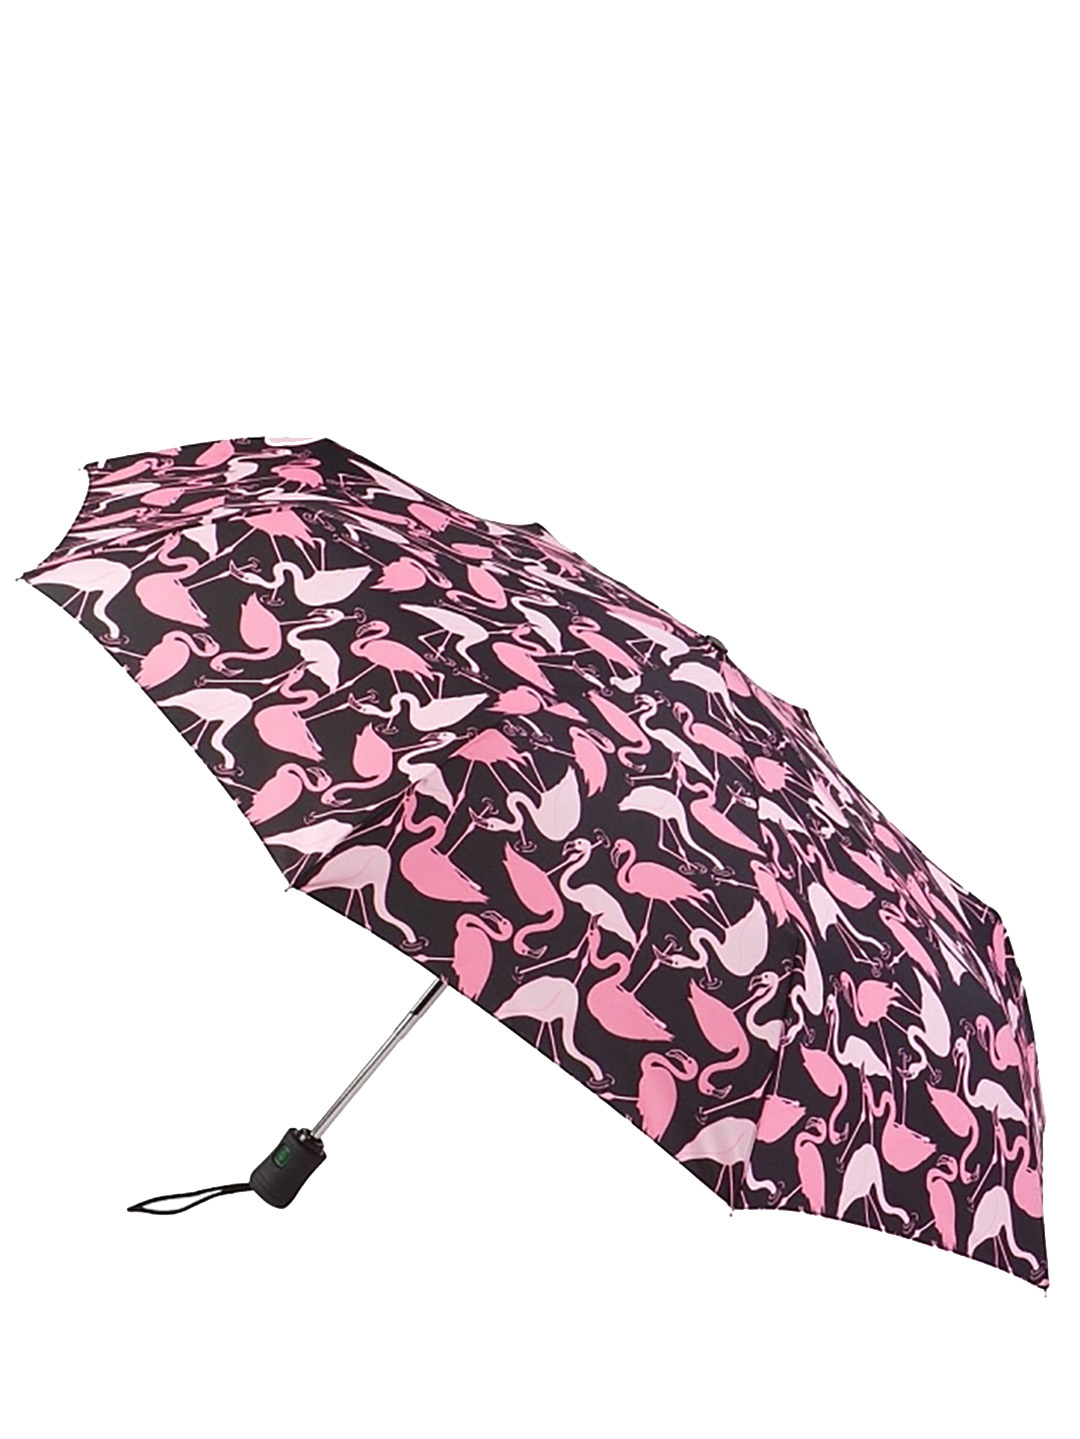 Фото Женский зонт-автомат с узором розовых фламинго 